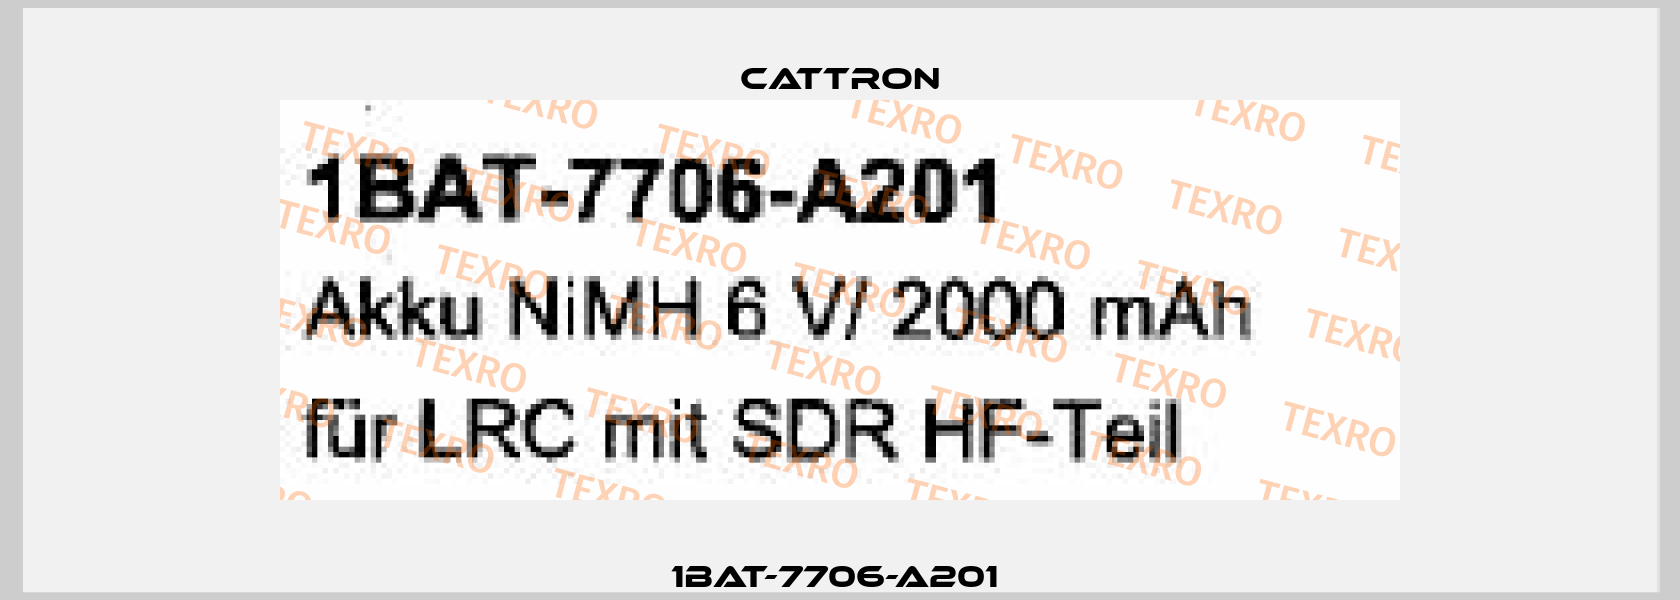 1BAT-7706-A201  Cattron